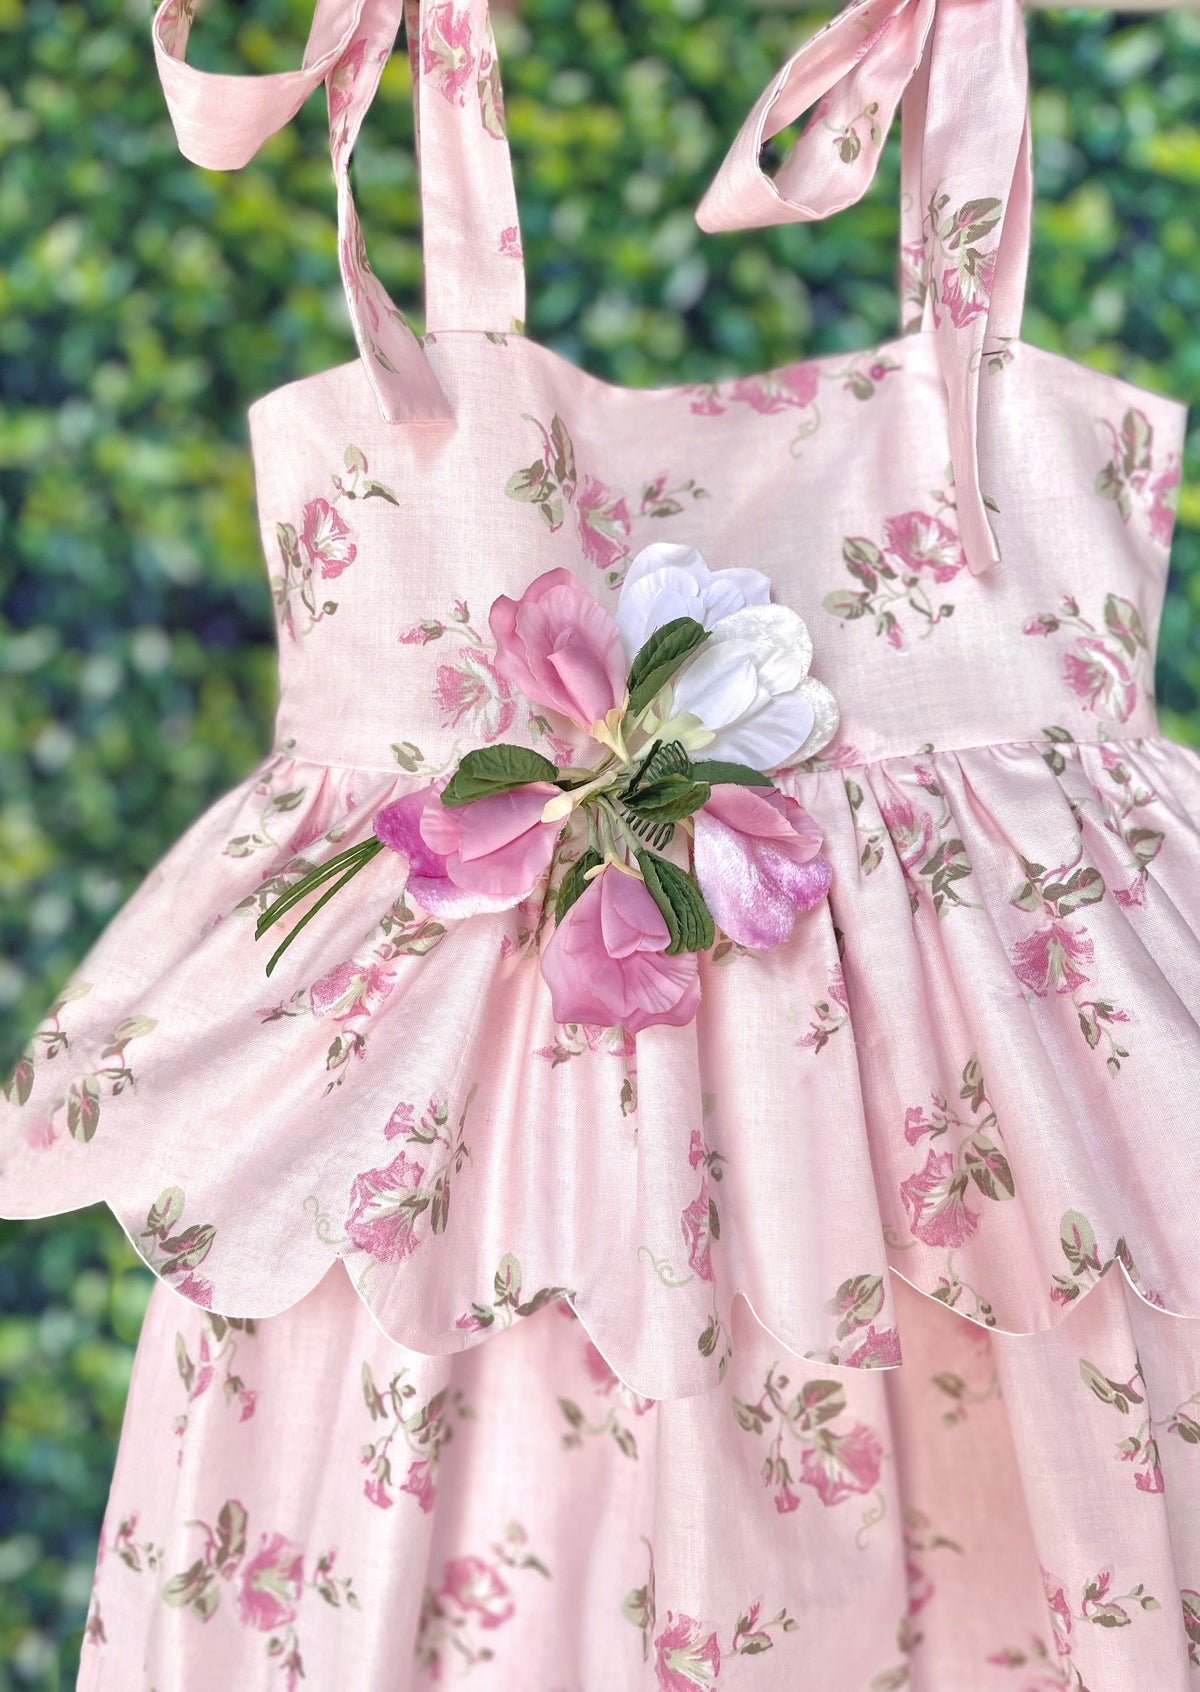 Scallop Peplum Petal Dress in Pink Morning Glory